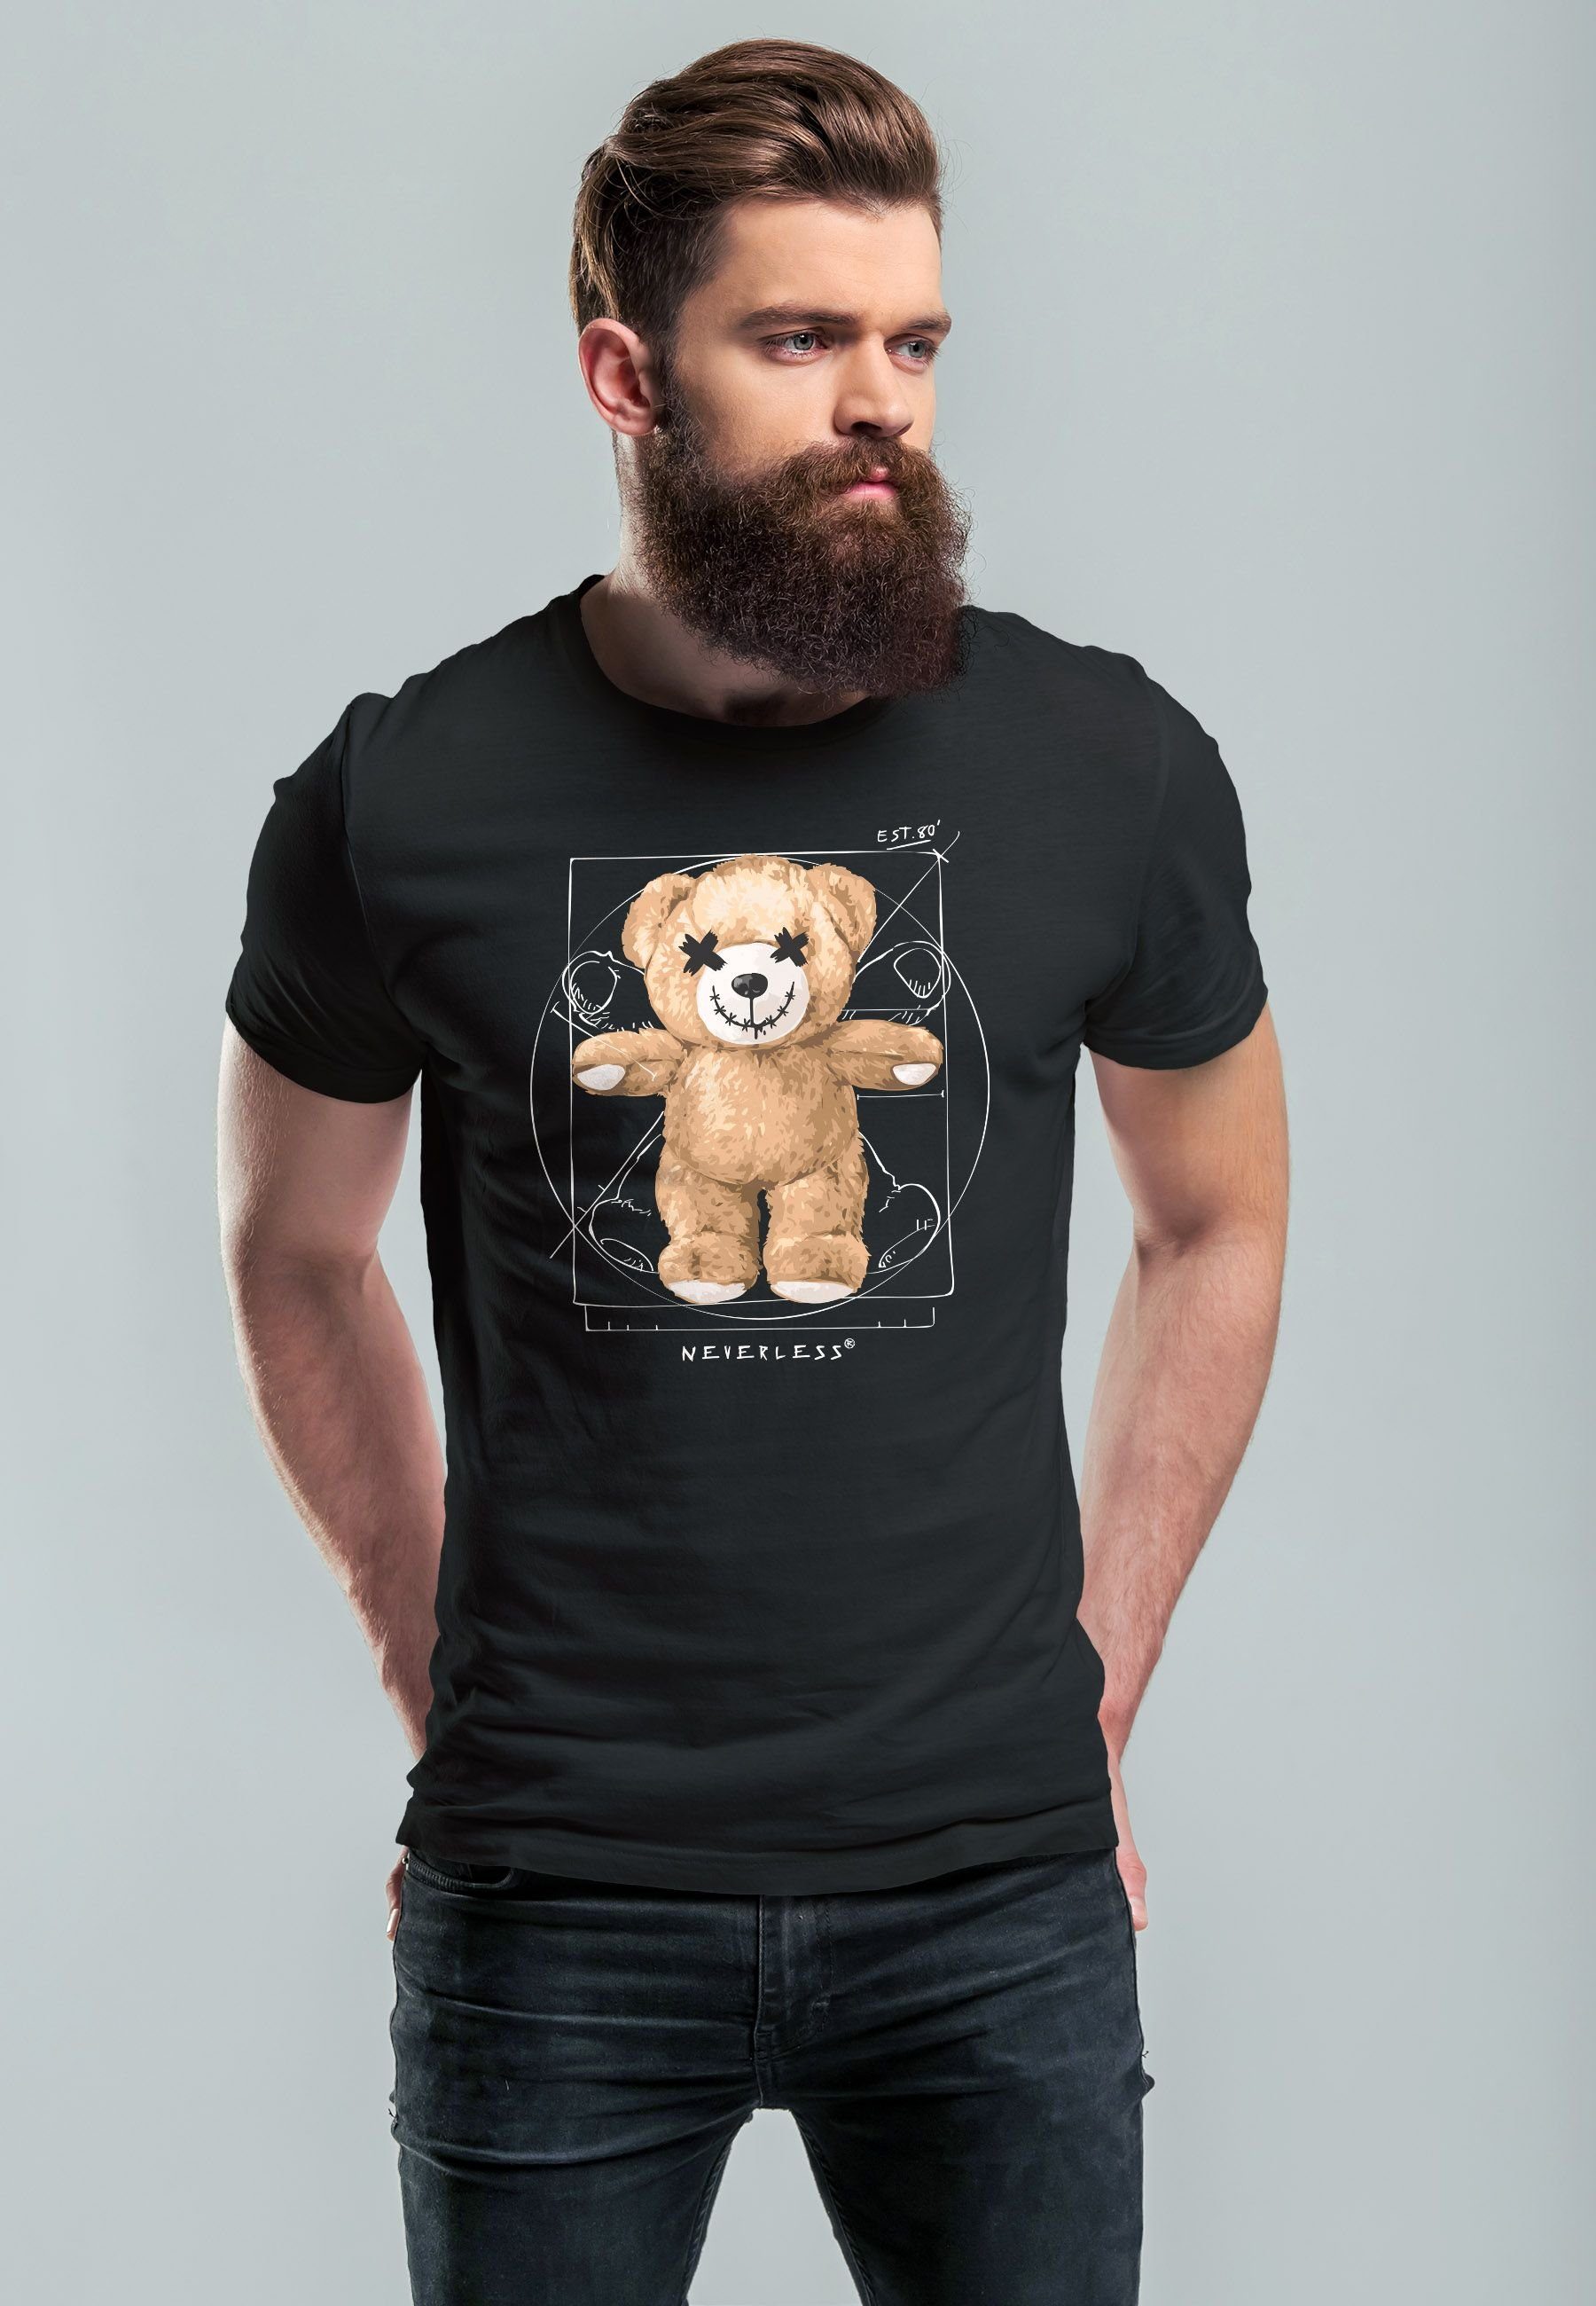 Meme Neverless Print-Shirt Parodie Fashion Bär Teddy Print T-Shirt DaVinci Print schwarz Streetstyl mit Herren